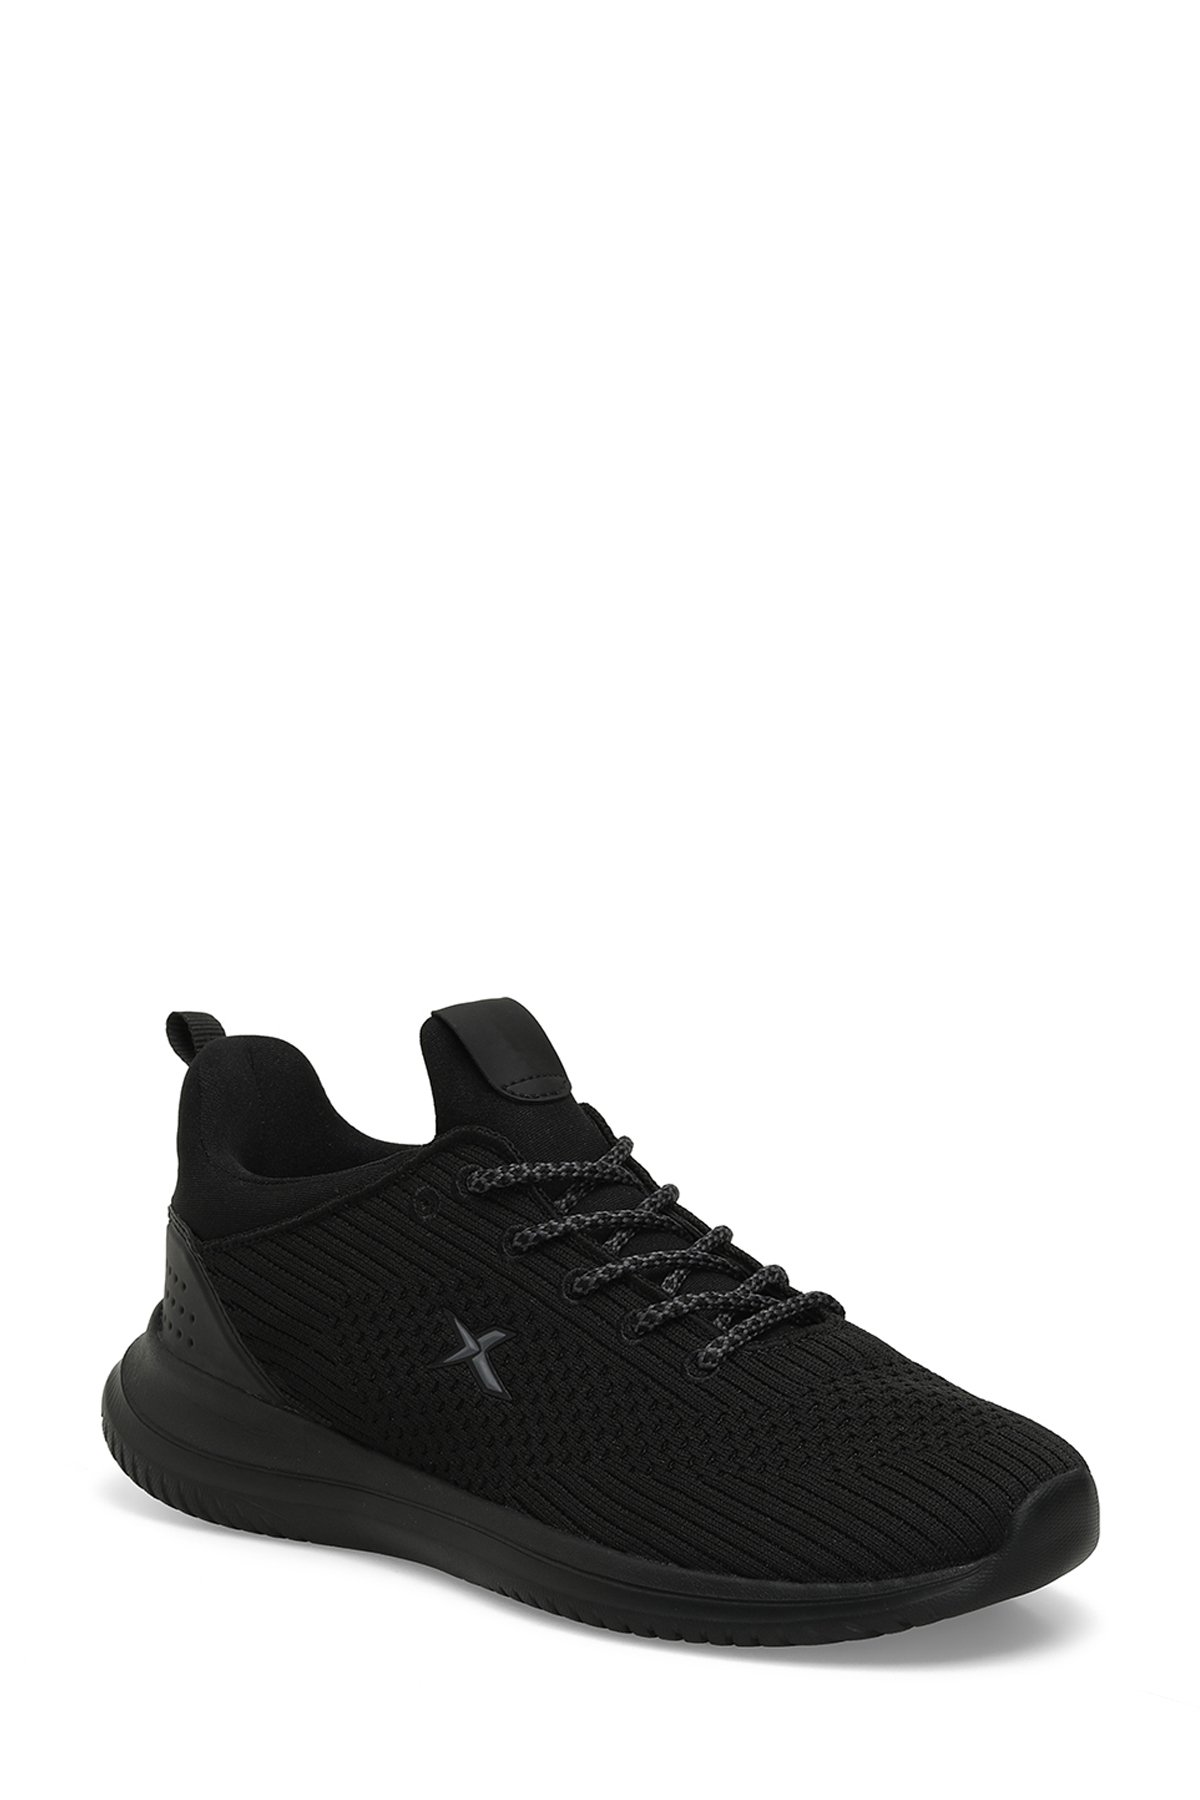 Levně KINETIX RAY TX 4FX Men's Black Running Shoe